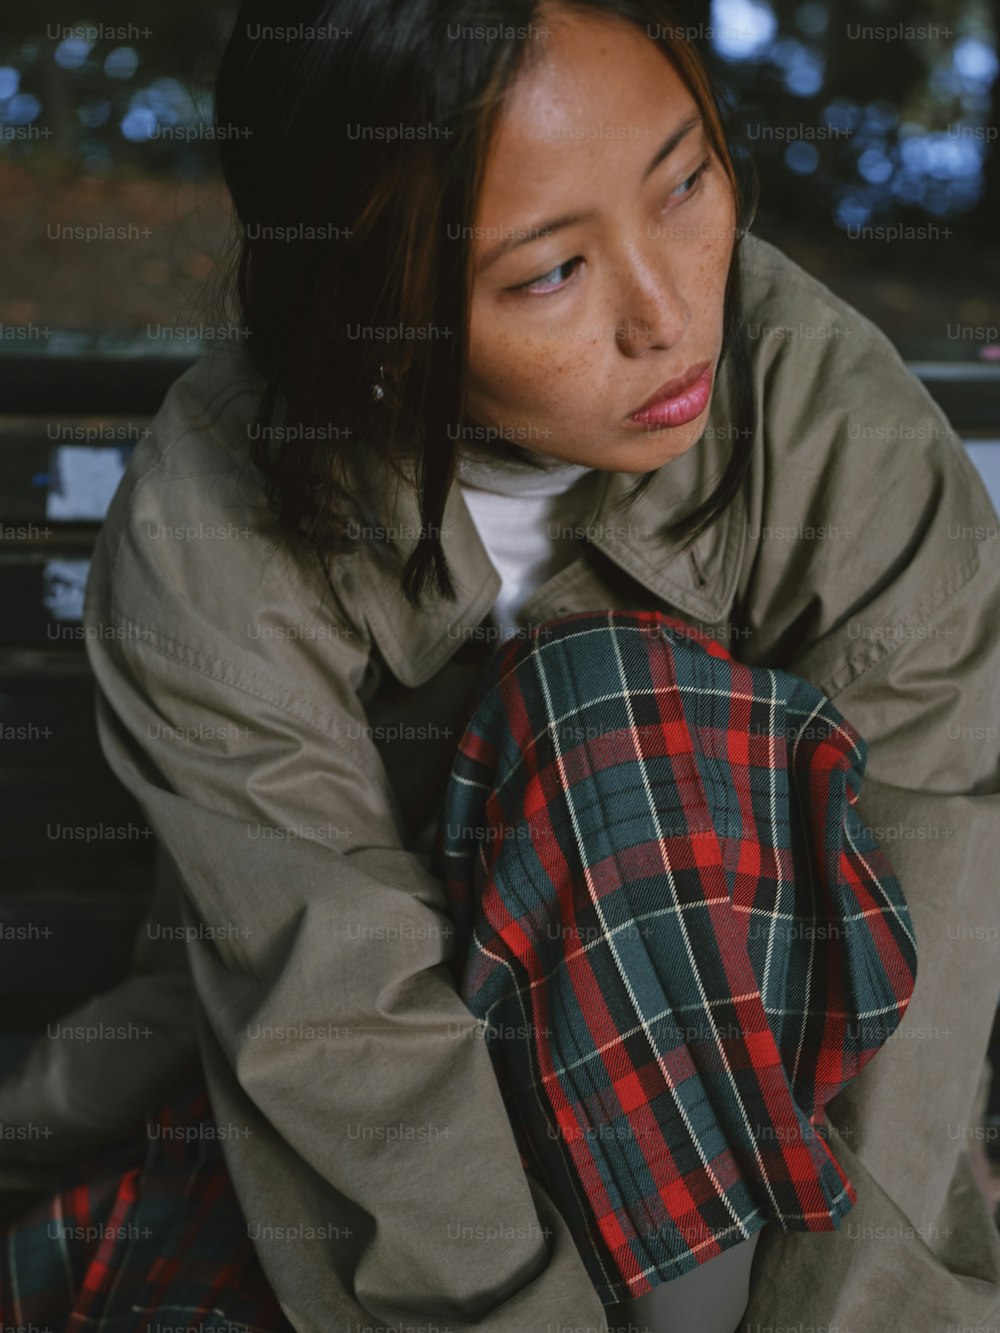 a woman sitting on a bench wearing a plaid shirt